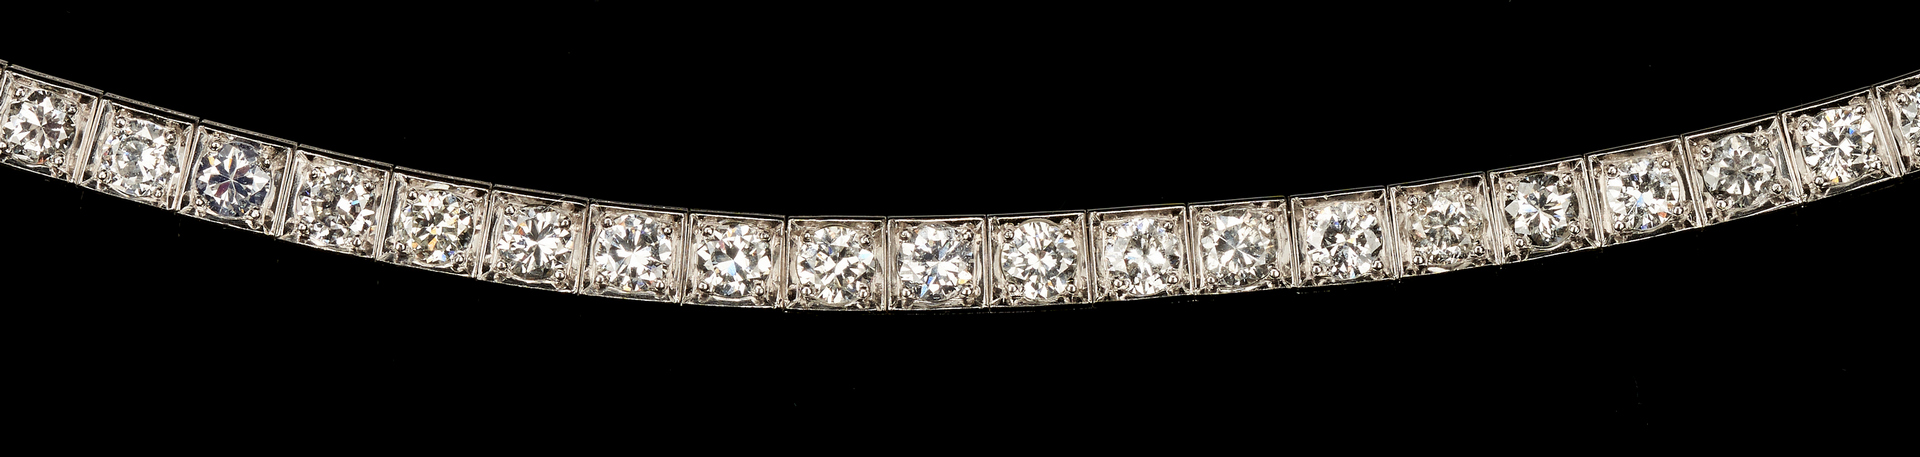 Lot 30: Platinum & Diamond Choker Necklace, approx. 9 Carats